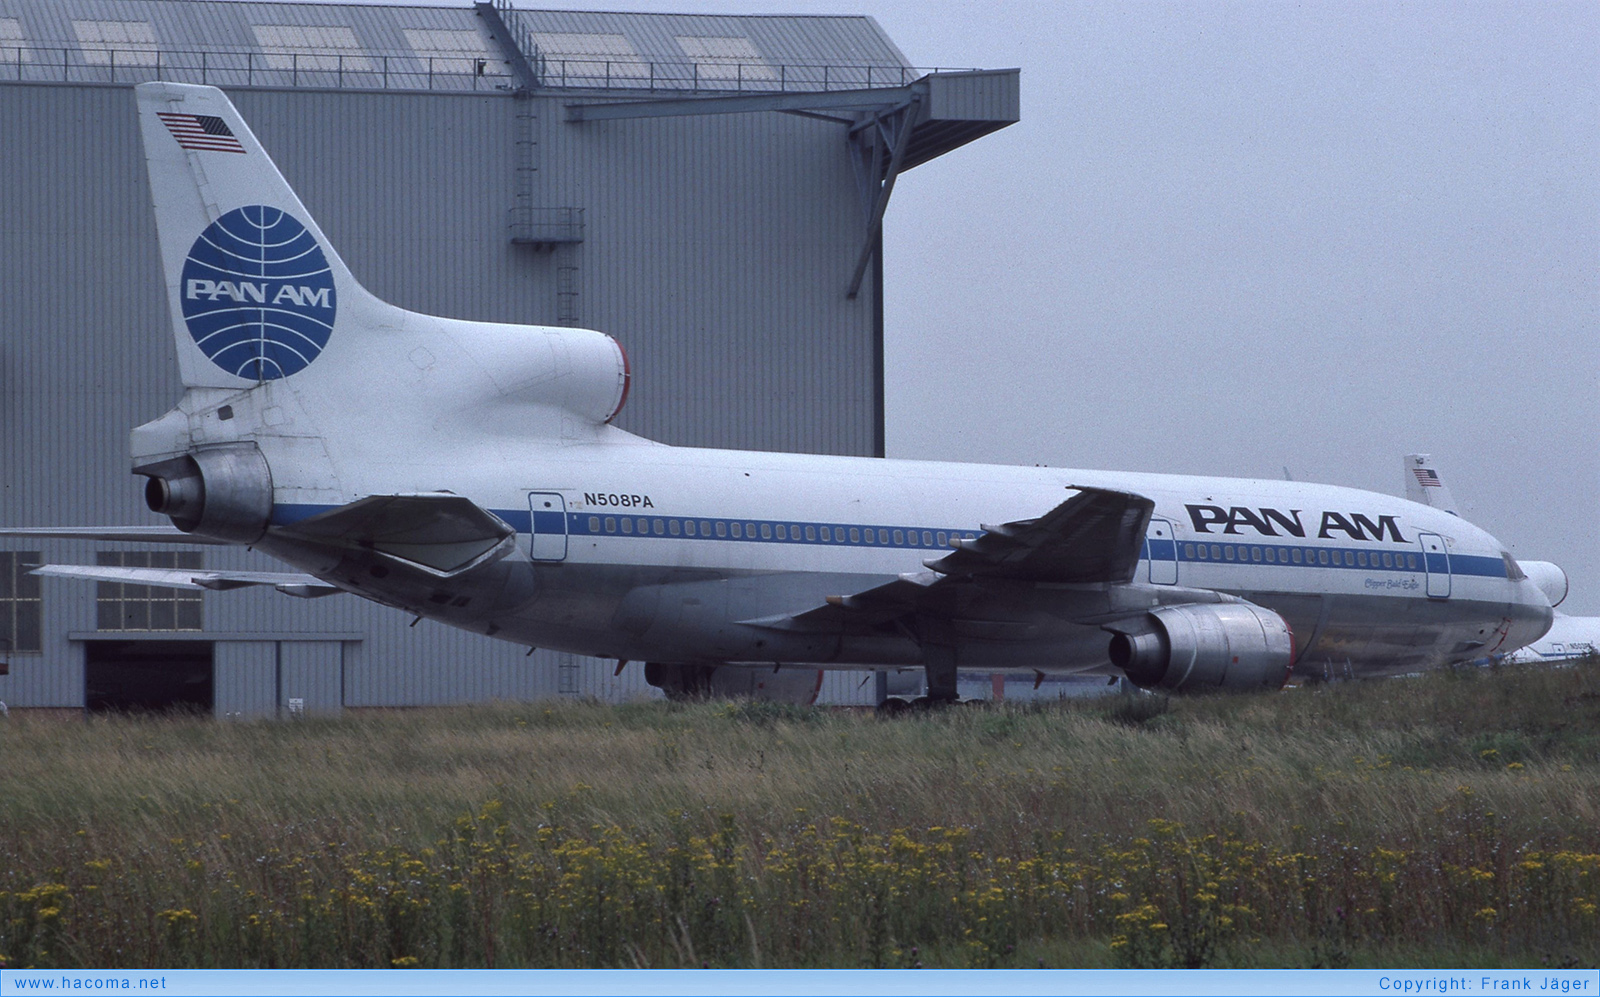 Foto von N508PA - Pan Am Clipper Bald Eagle - Cambridge Airport - 26.07.1985